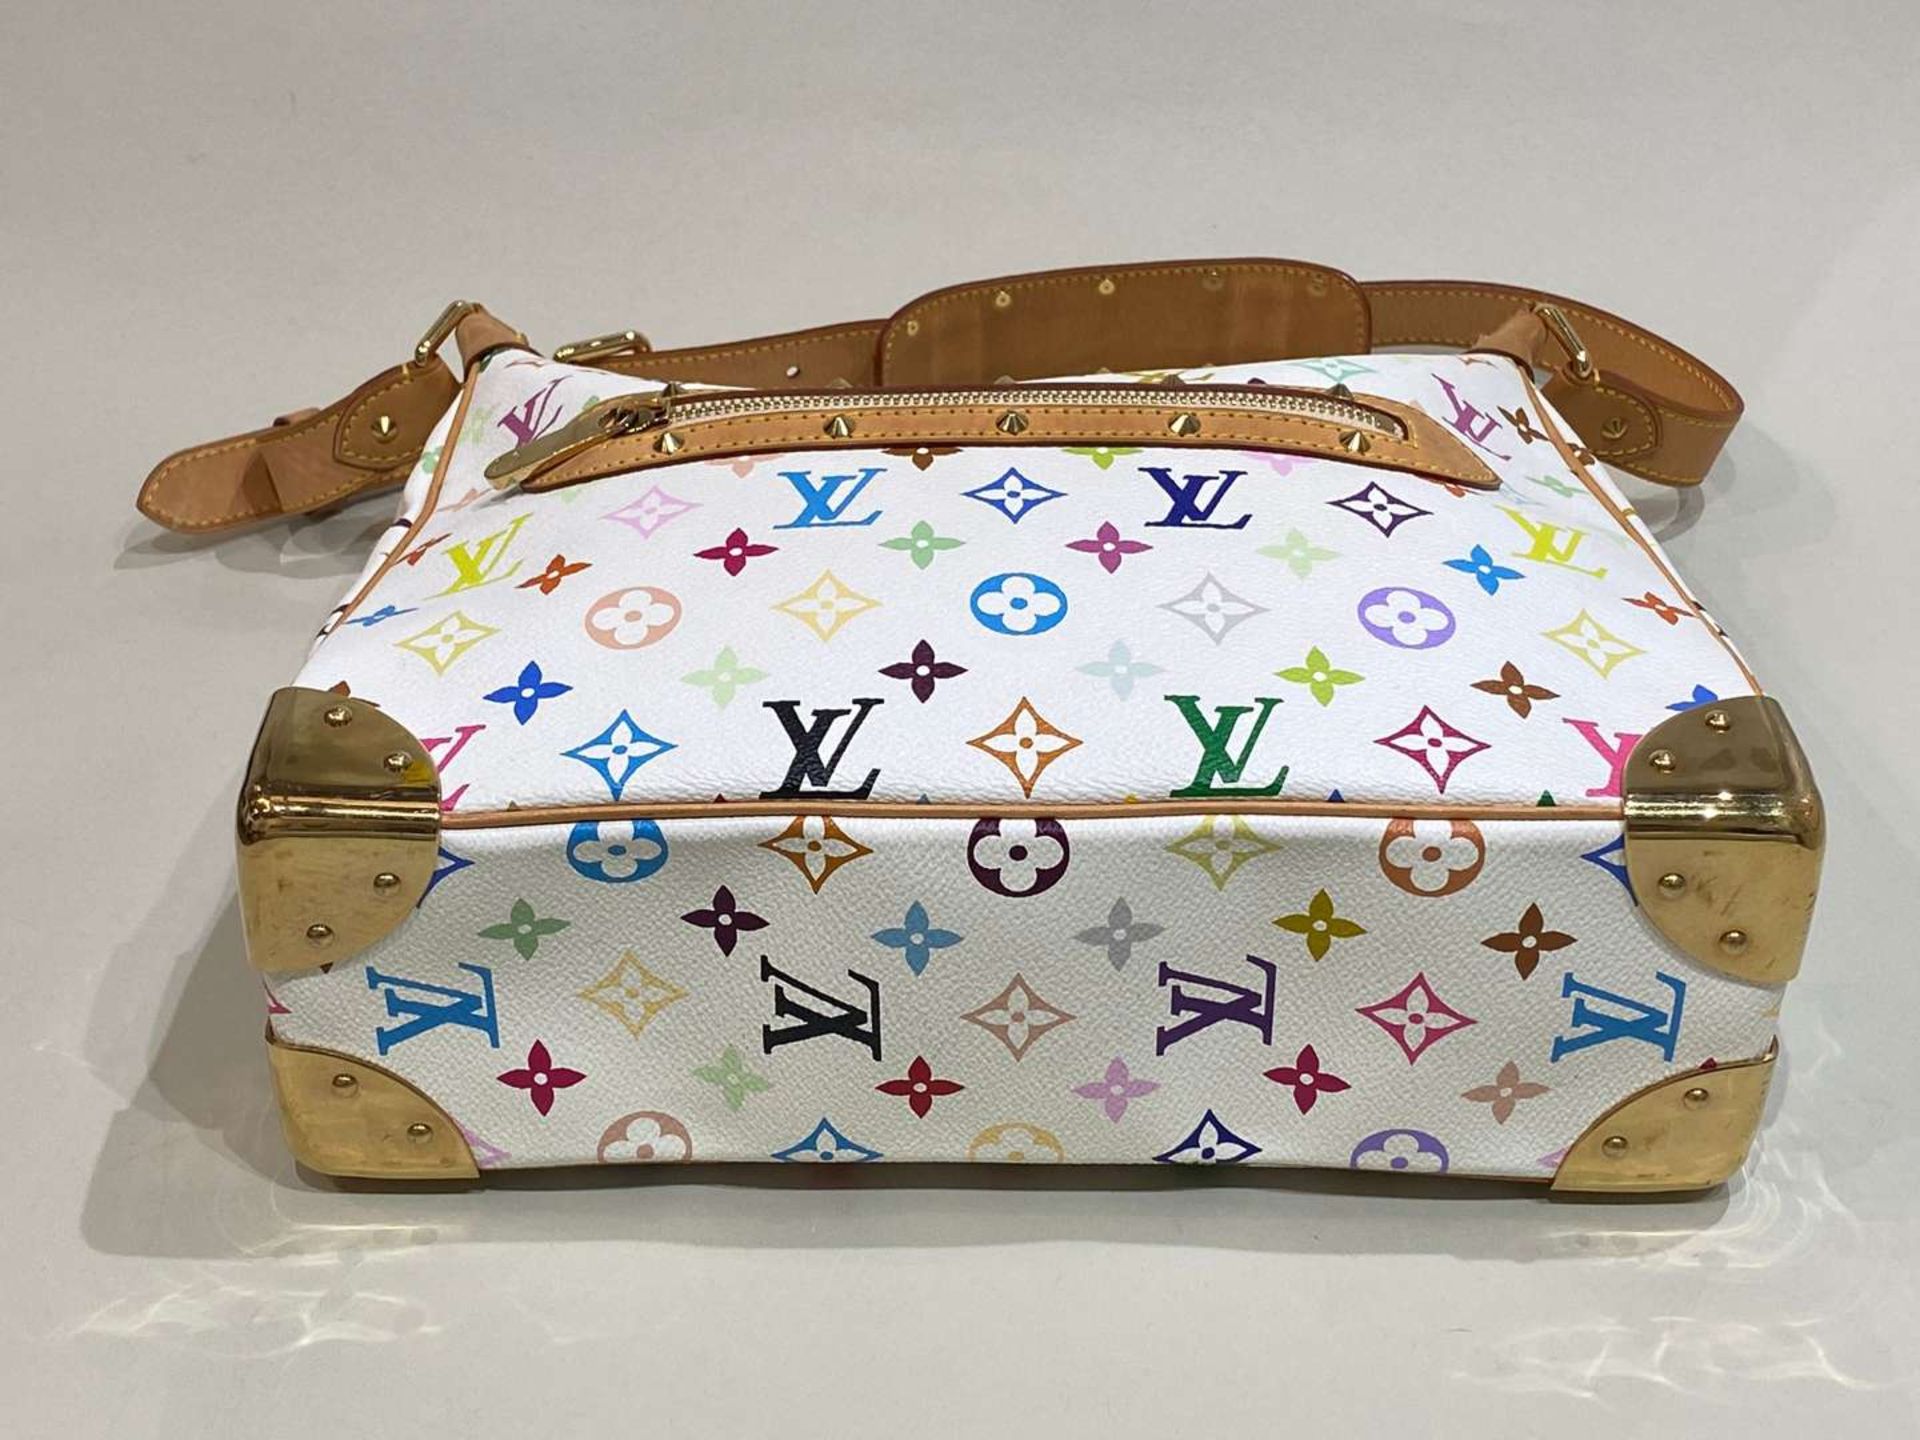 LOUIS VUITTON, Boulogne, leather, multicolour monogrammed, crossbody bag, Le Takashi Murakami - Image 6 of 9